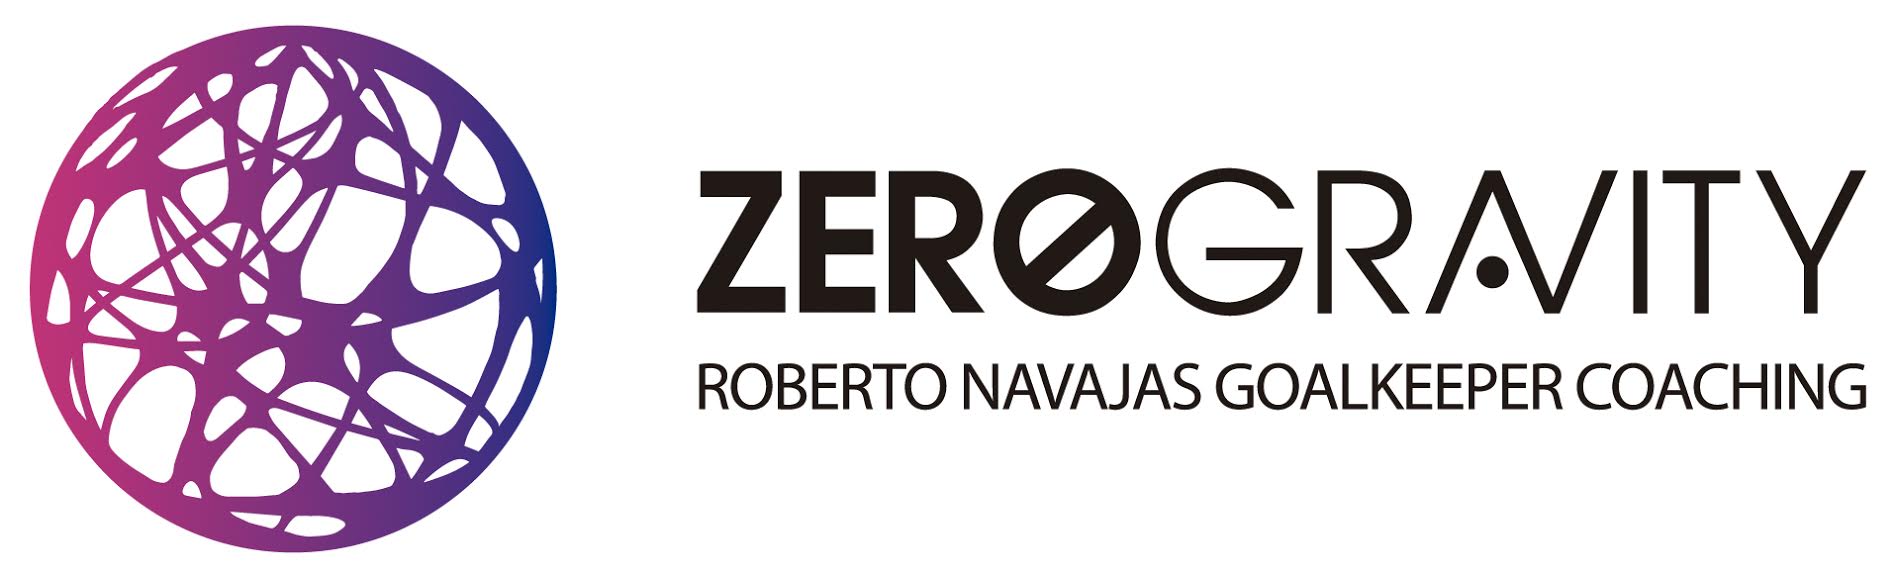 ZeroGravity Roberto Navajas